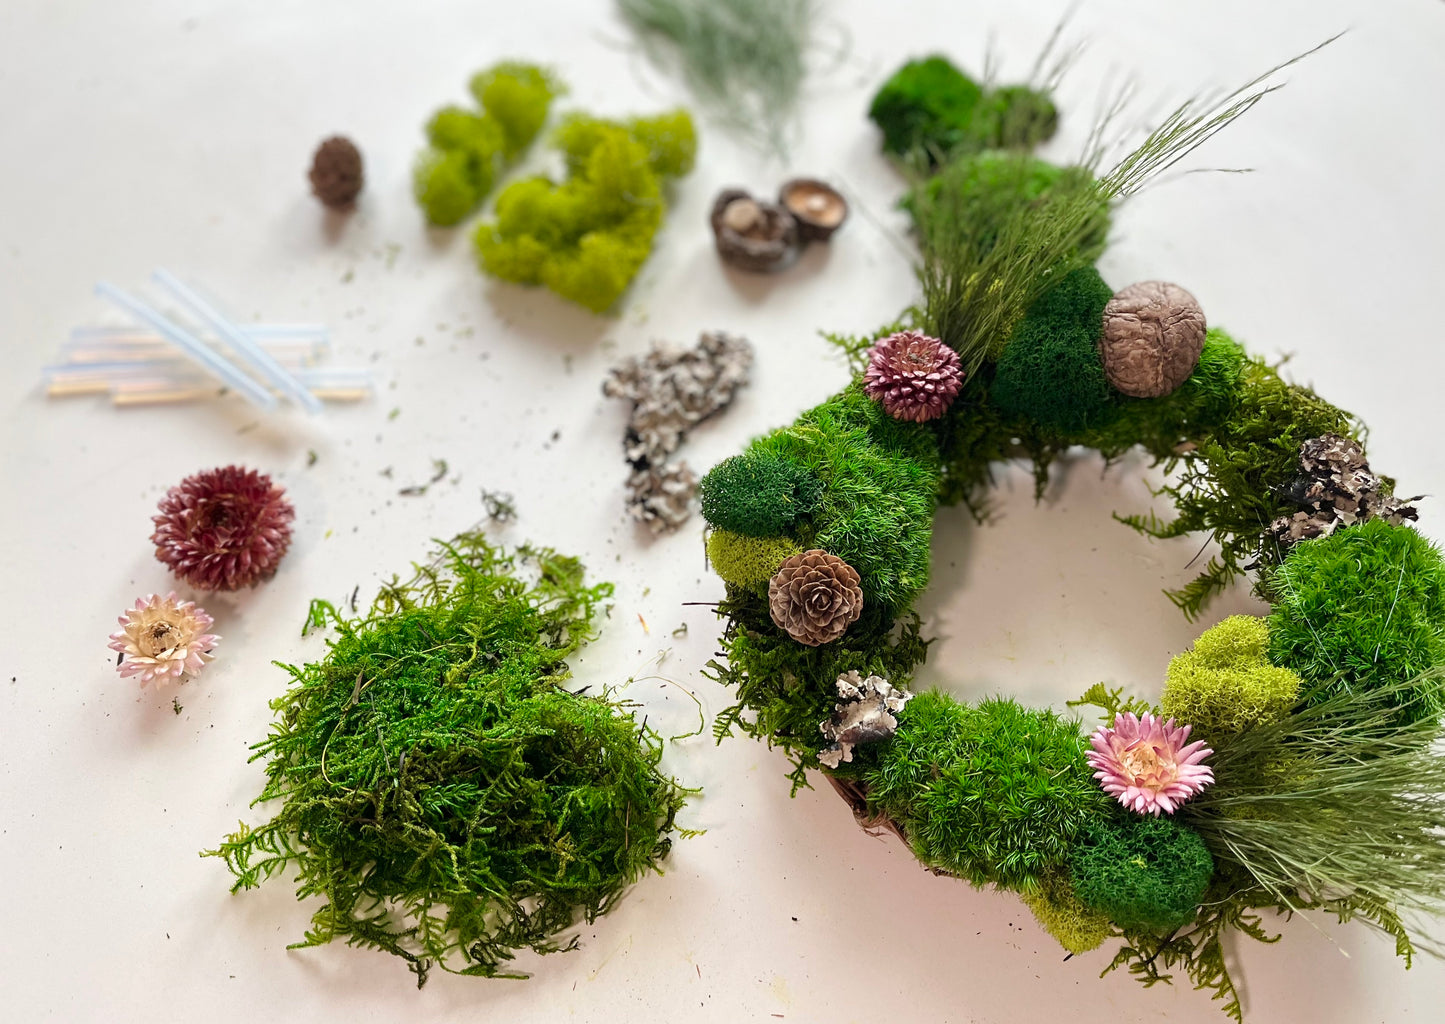 DIY Moss Wall Art Wreath Kit